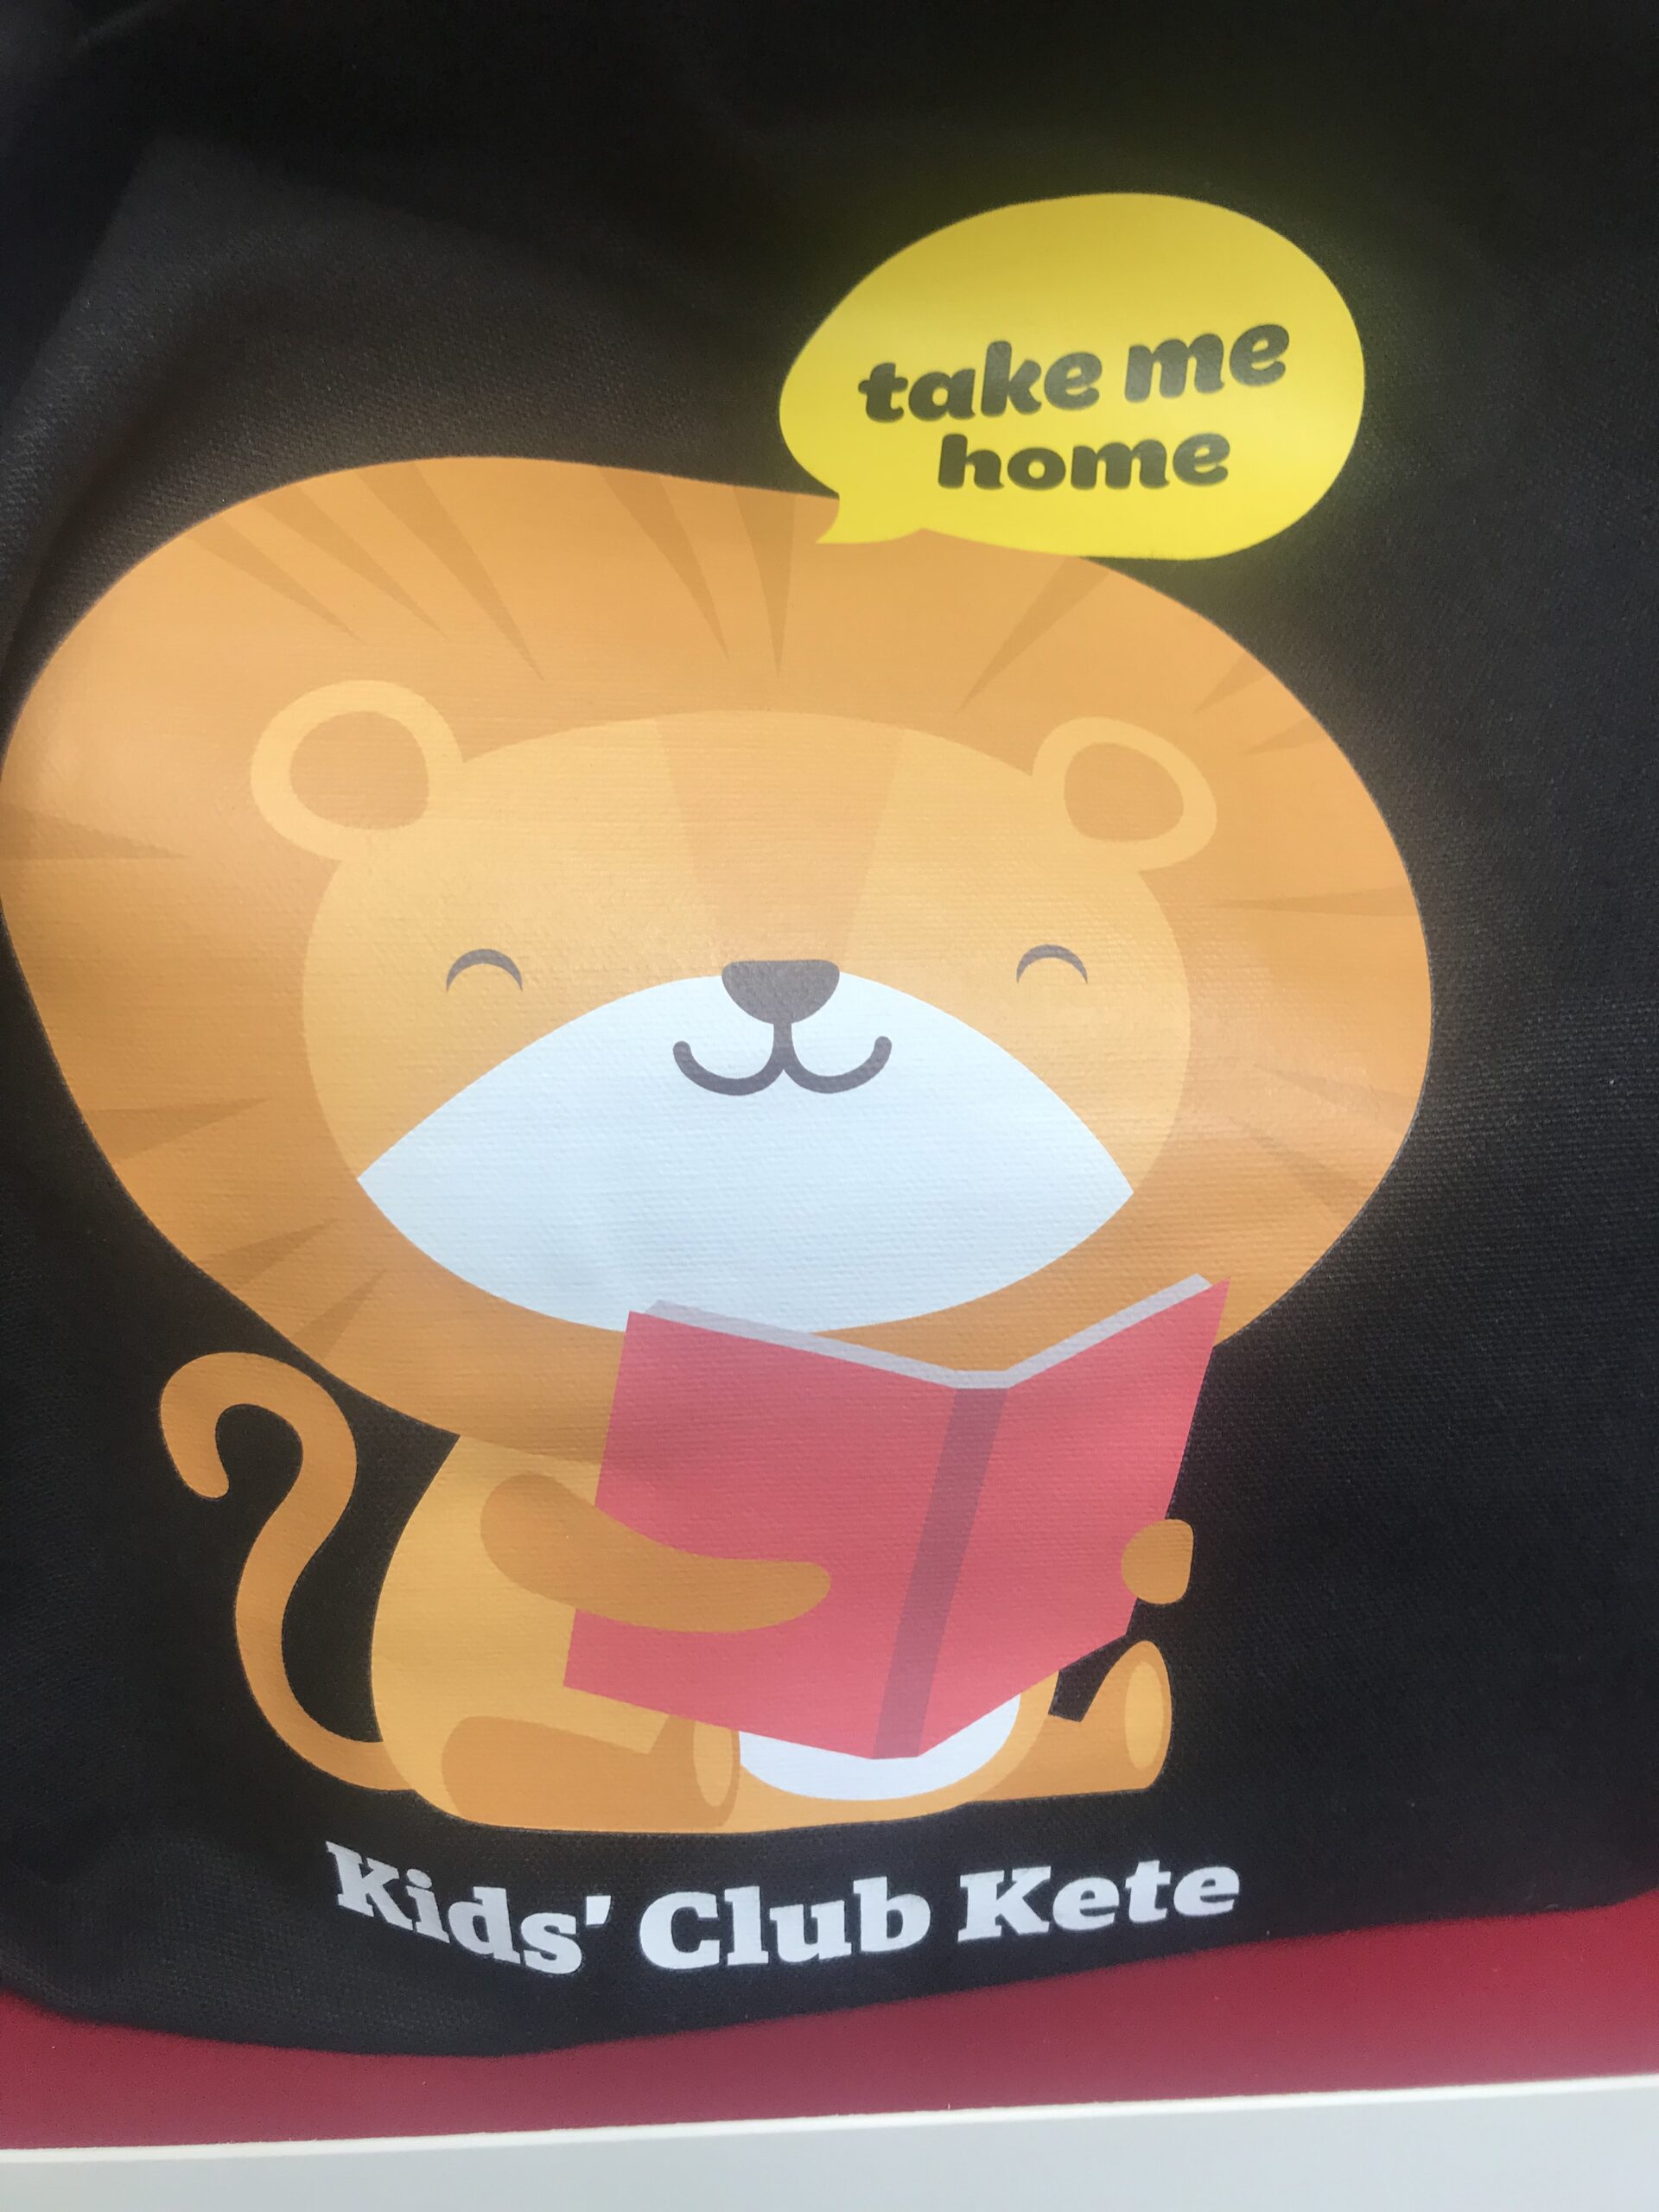 Image of a Kids' Club Kete